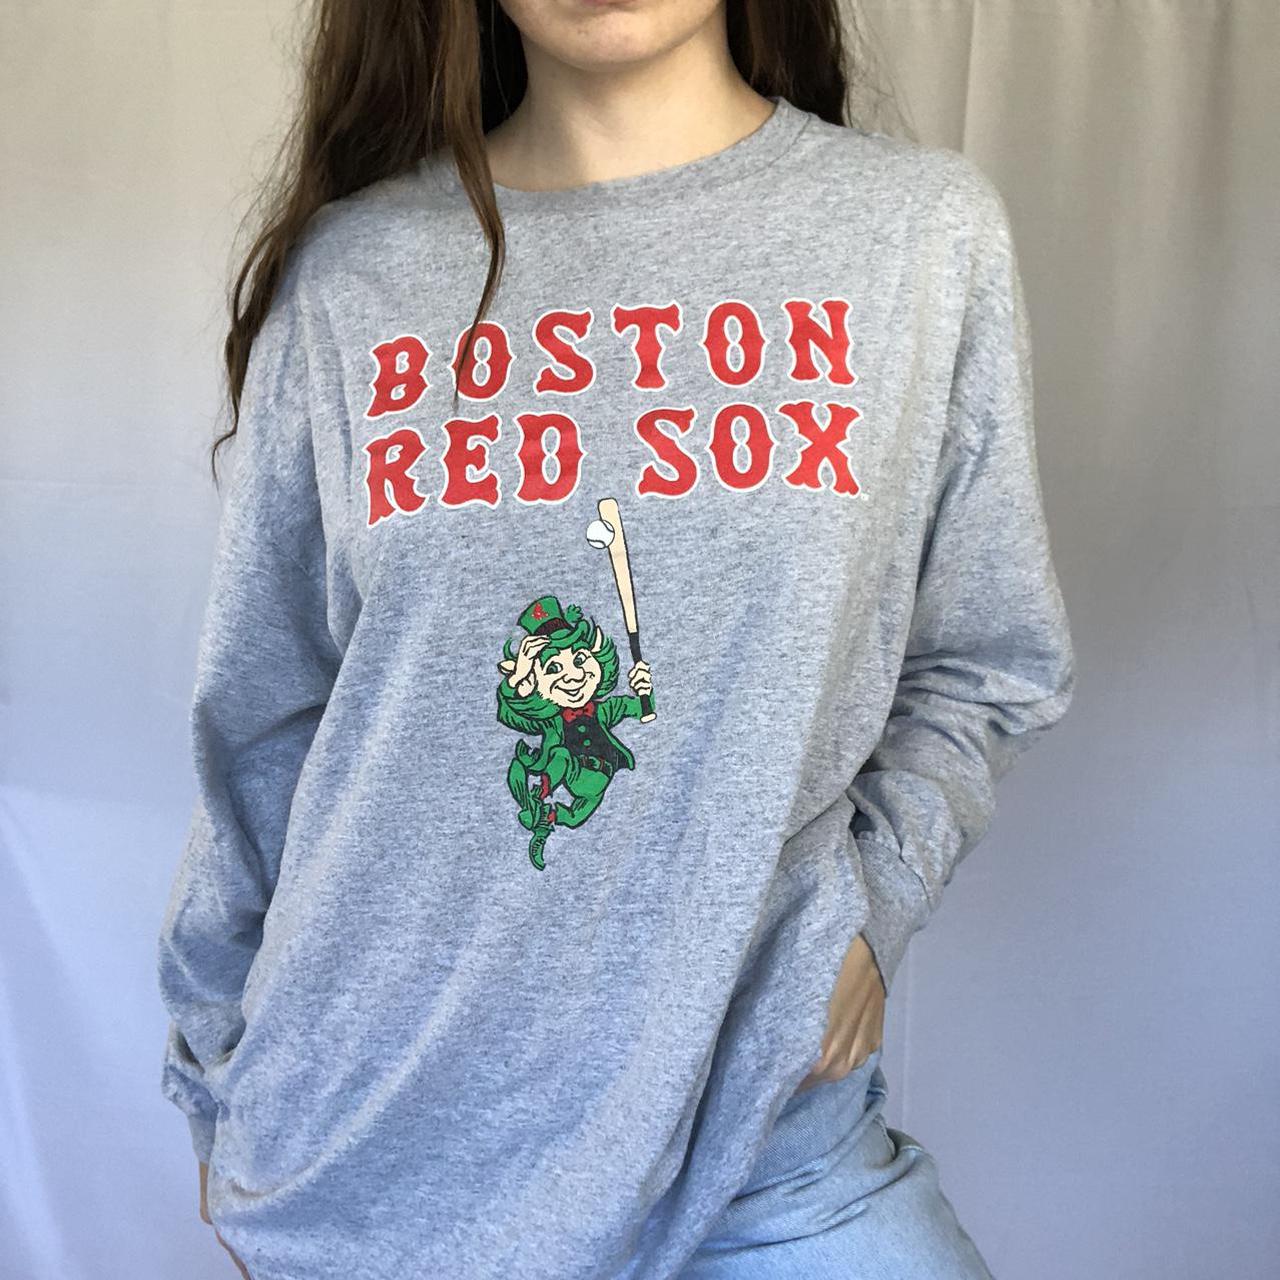 Mens Boston Red Sox Long Sleeve T-Shirts, Red Sox Long-Sleeved